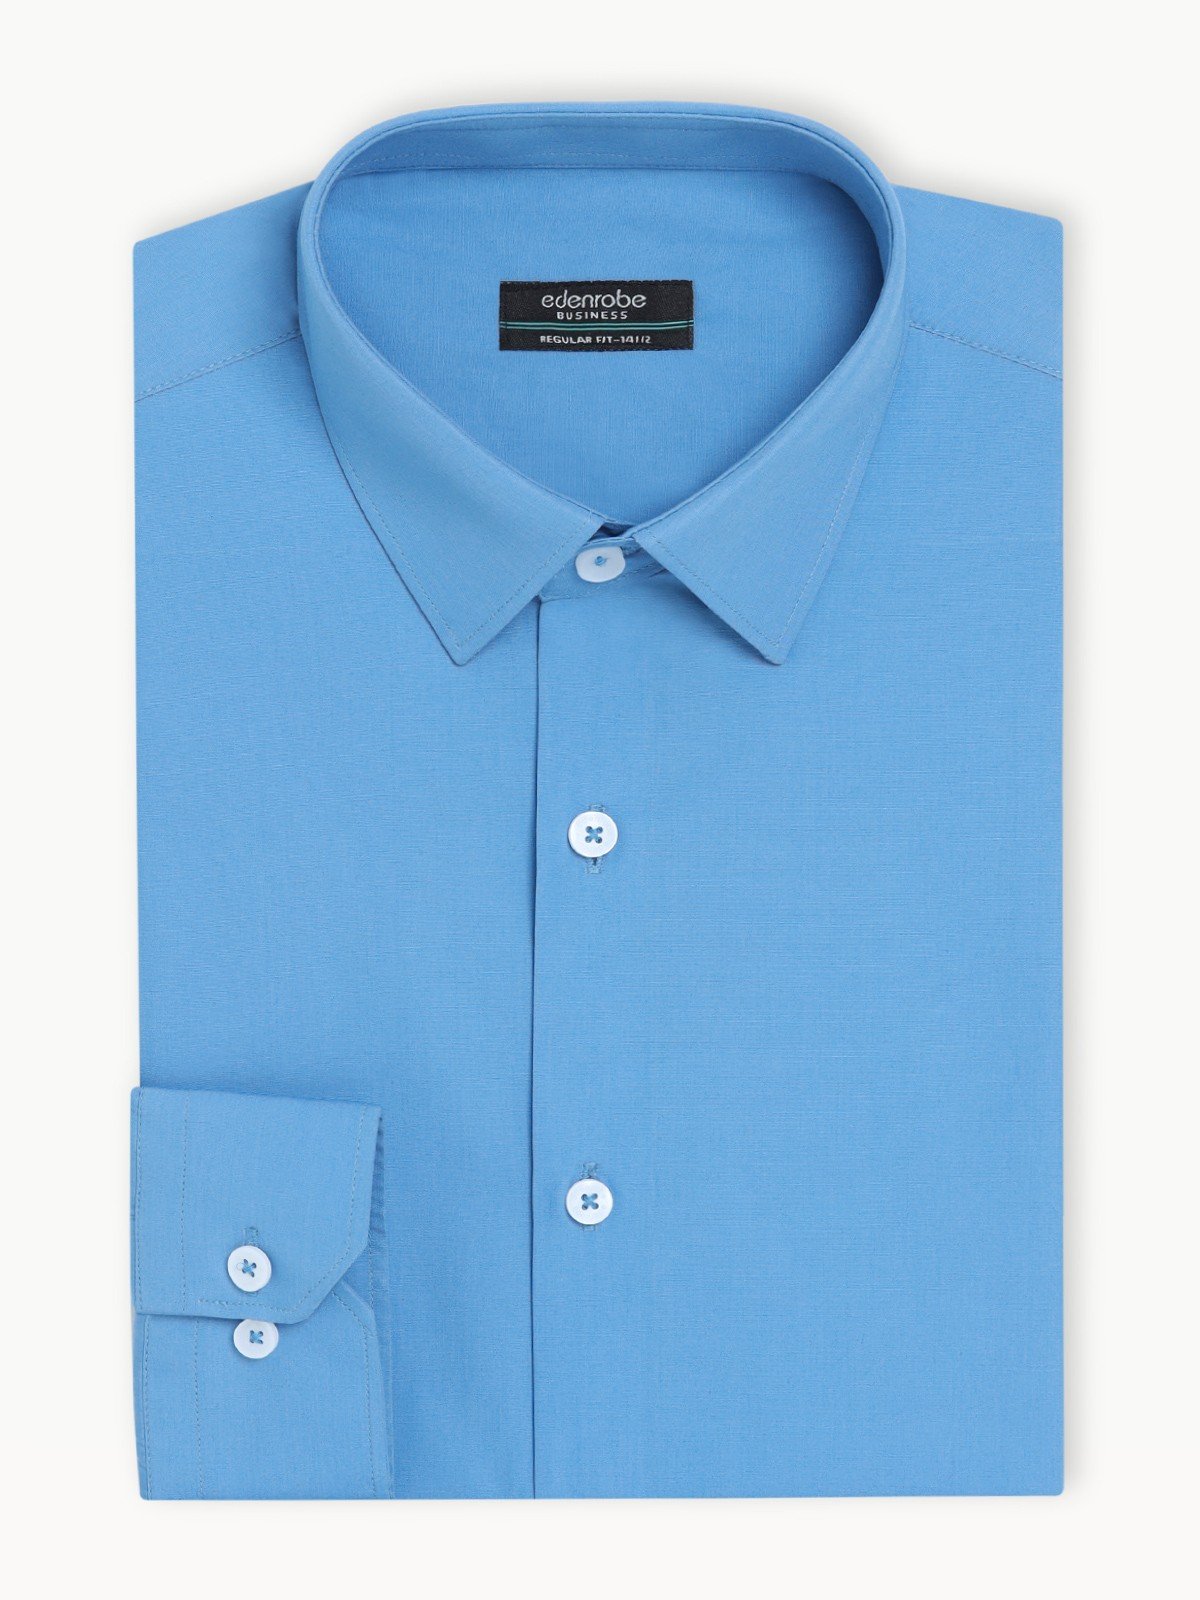 Men's Blue Shirt Plain - EMTSB22-137